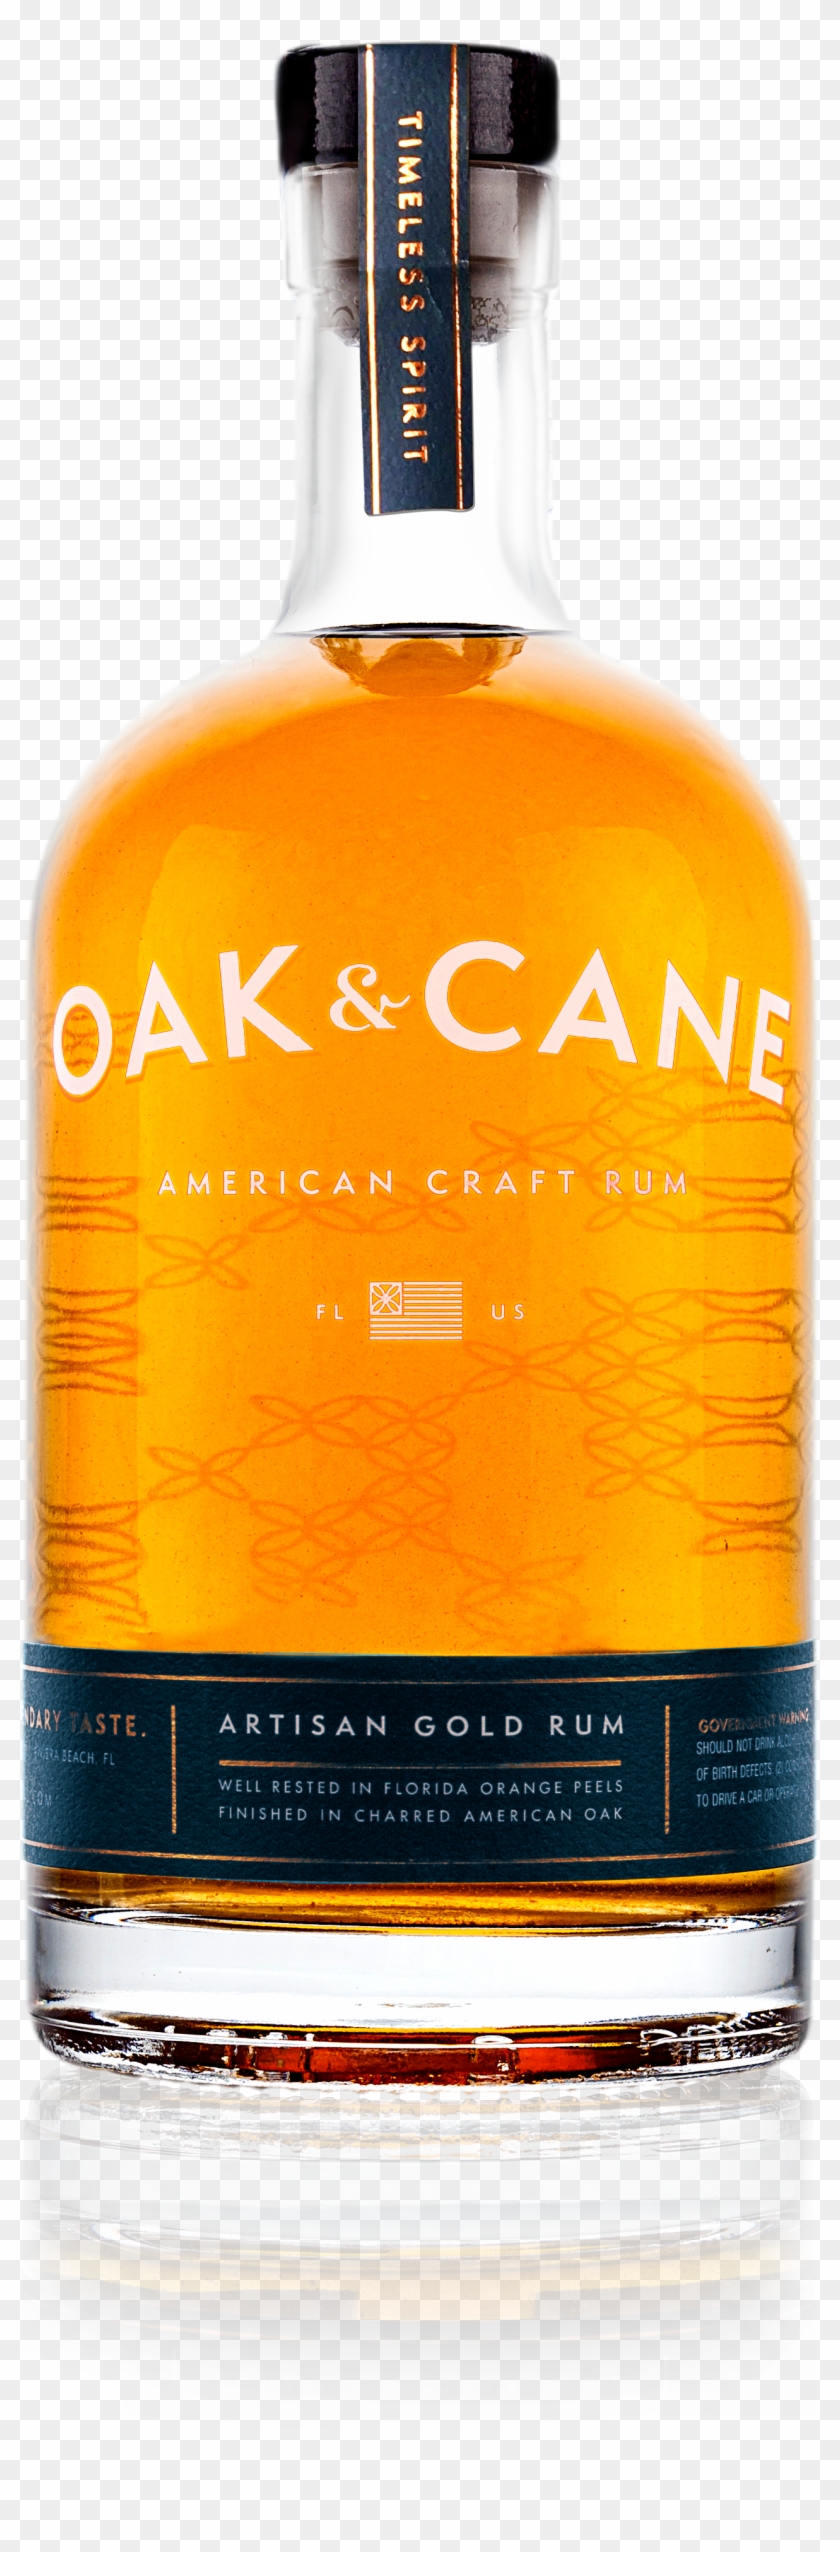 Official Oak & Cane Bottle - Grain Whisky Clipart #5921363